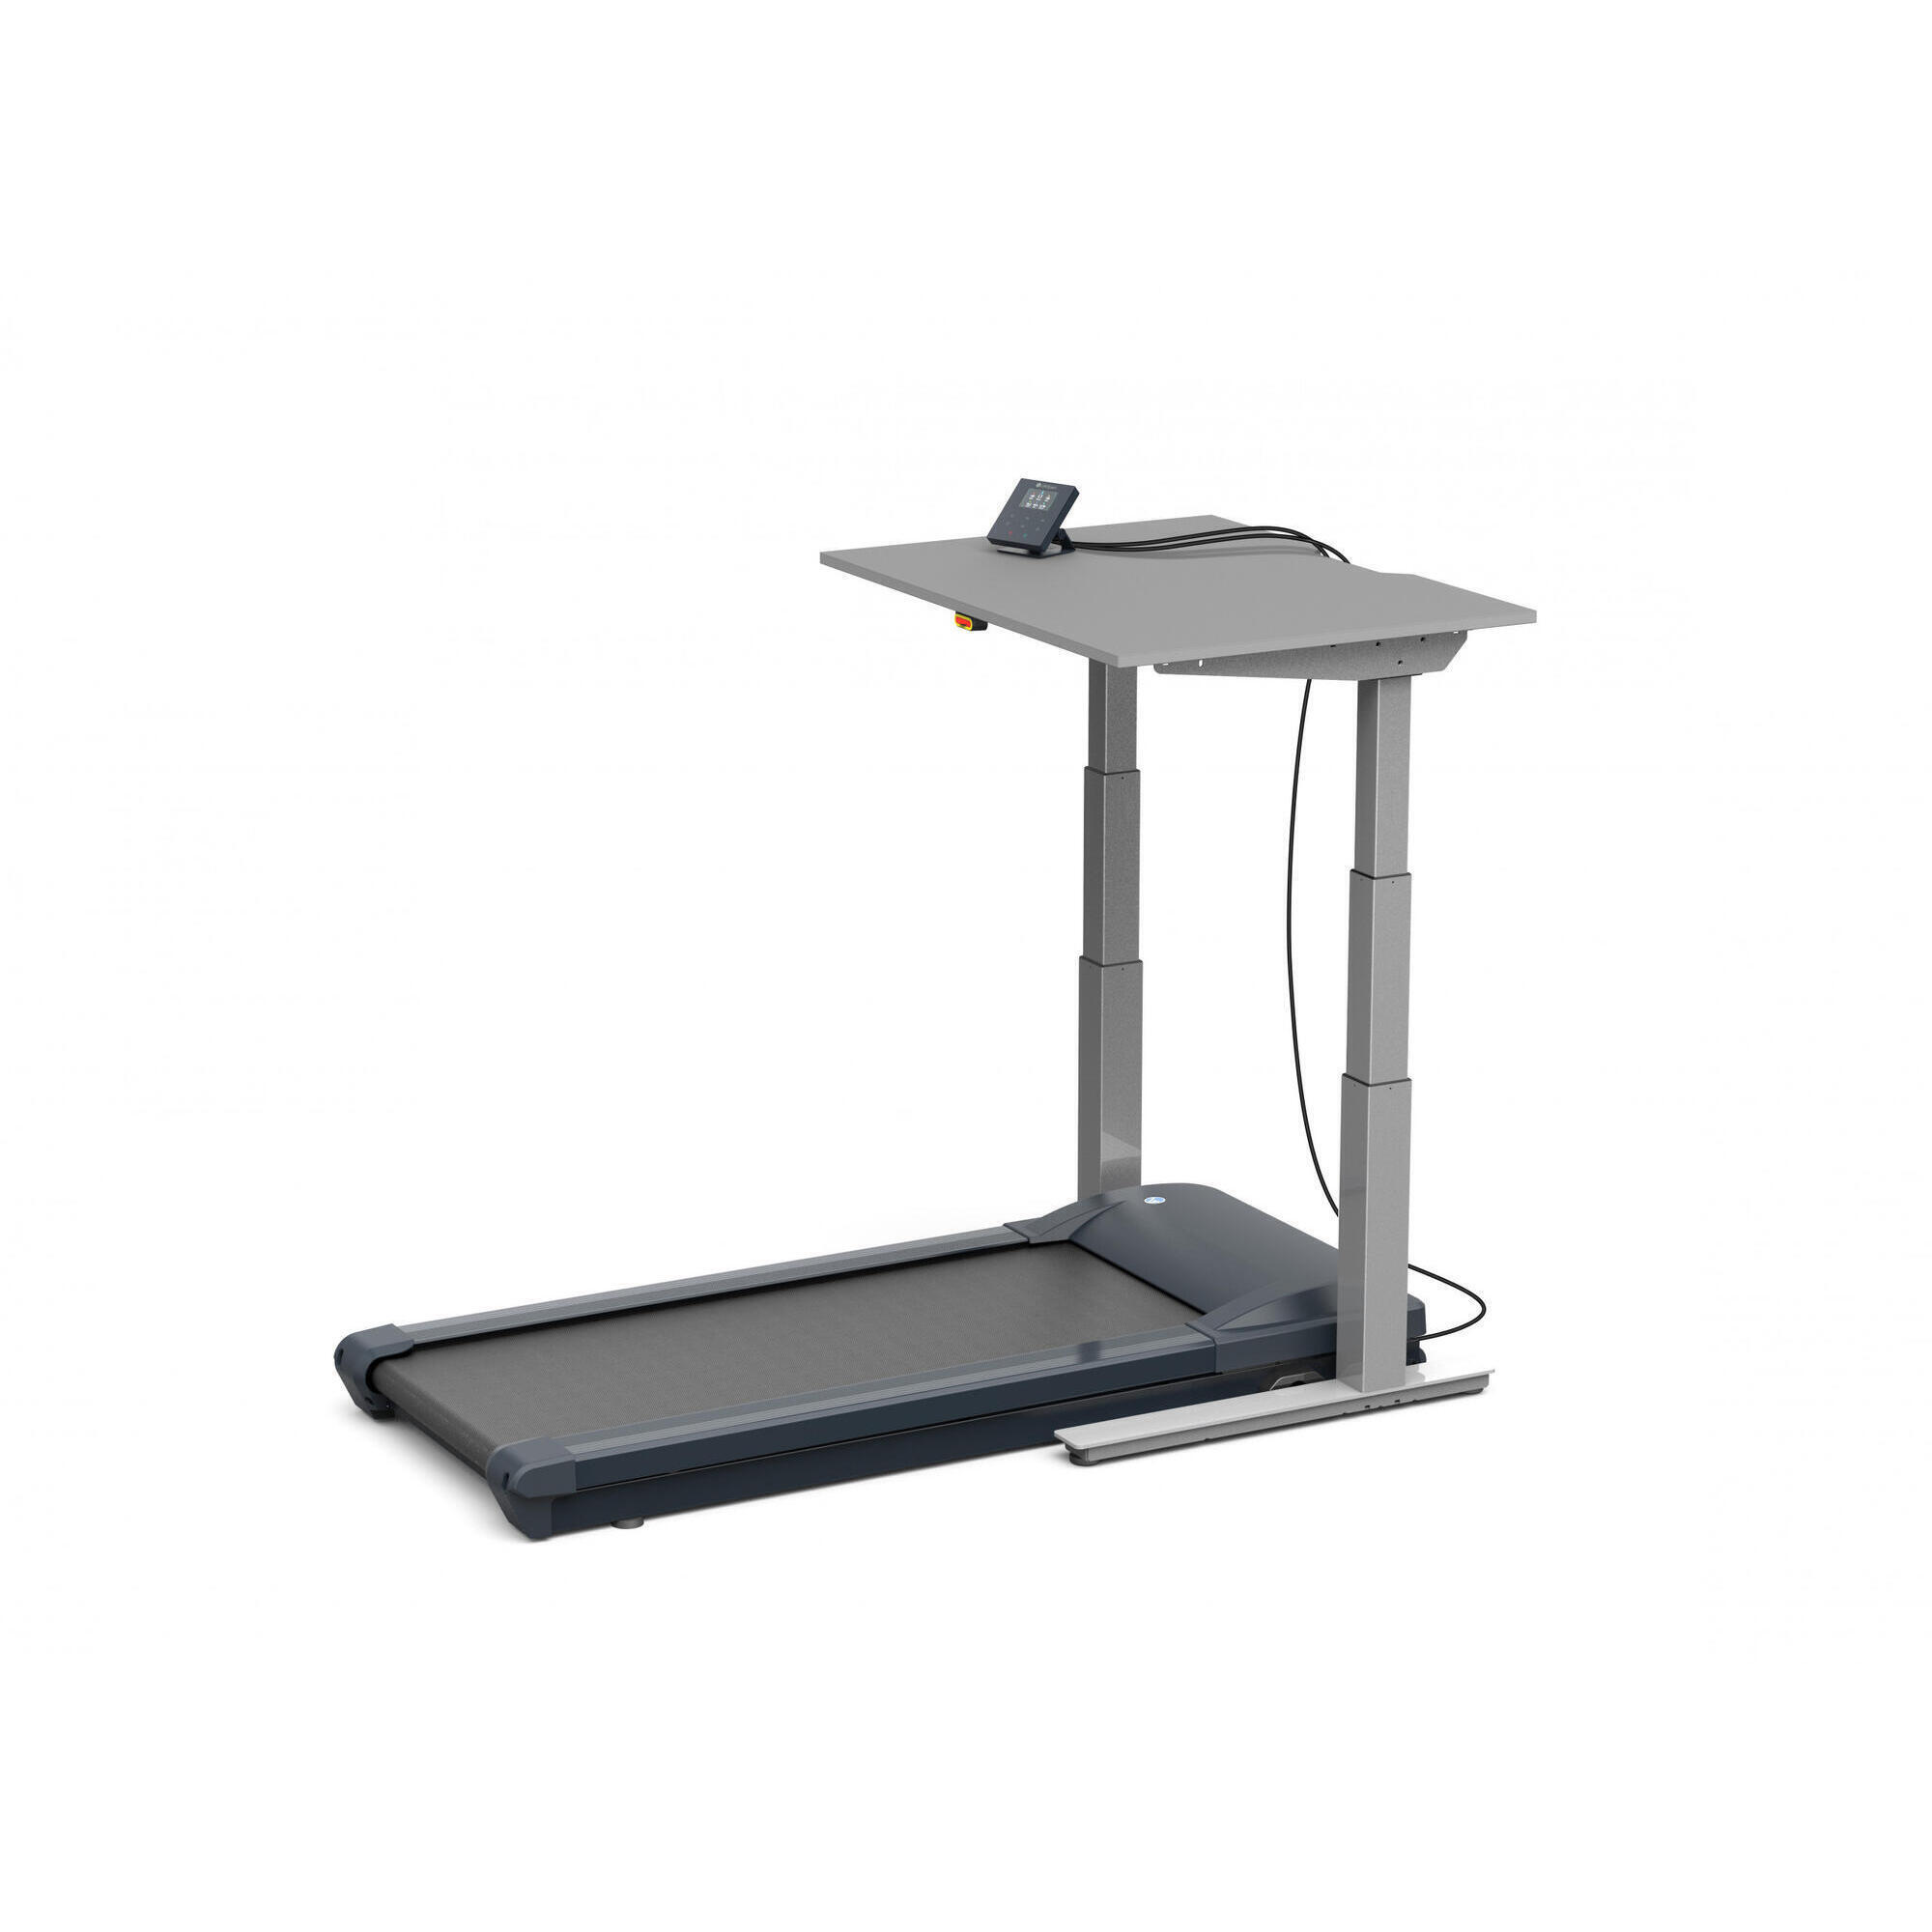 LIFESPAN LifeSpan Treadmill Desk TR5000-DT7 Omni 38" (96.5cm) Gray